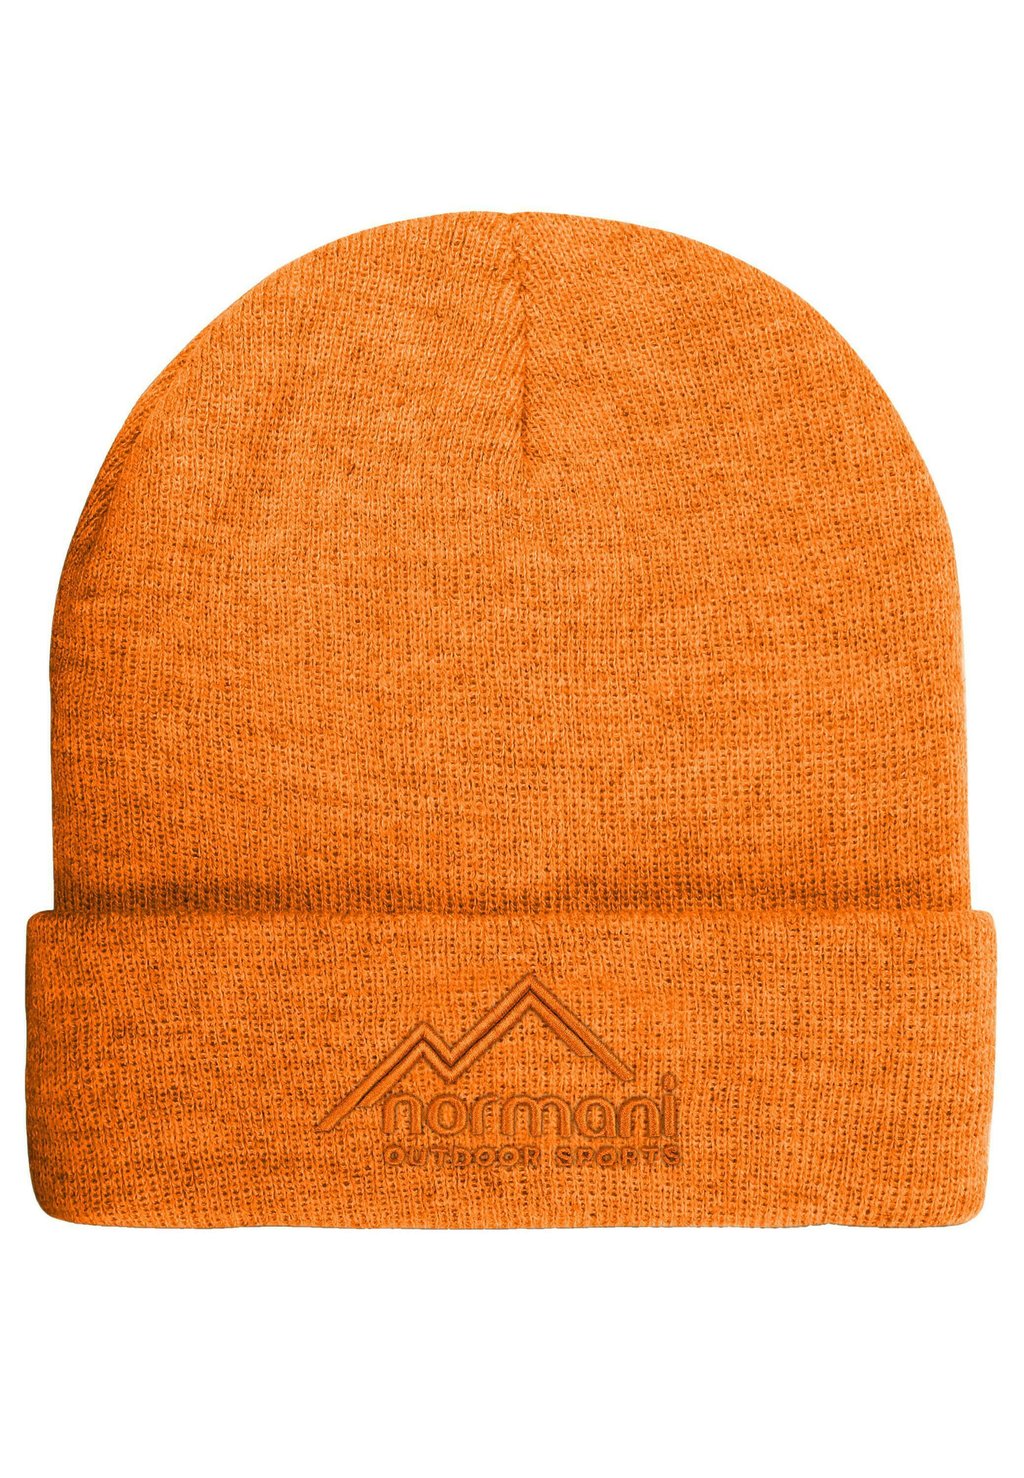 шапка buschhut normani outdoor sports цвет khaki Шапка CALGARY normani Outdoor Sports, цвет orange